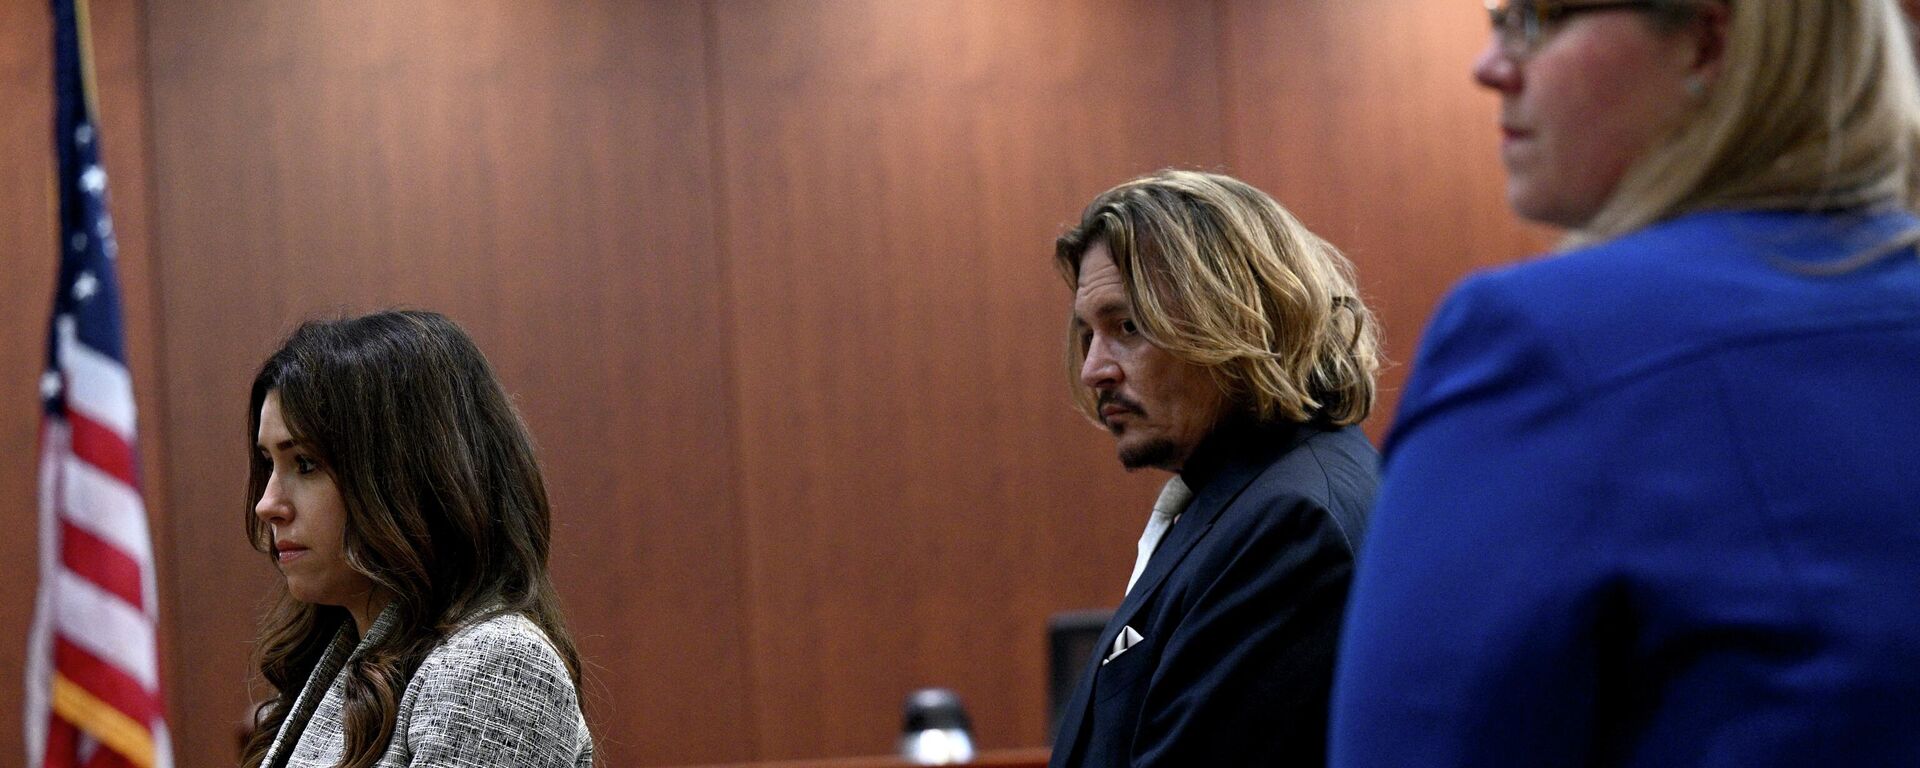 US actor Johnny Depp (C) looks on during the $50 million Depp vs Heard defamation trial at the Fairfax County Circuit Court in Fairfax, Virginia, on April 12, 2022 - Sputnik International, 1920, 13.04.2022